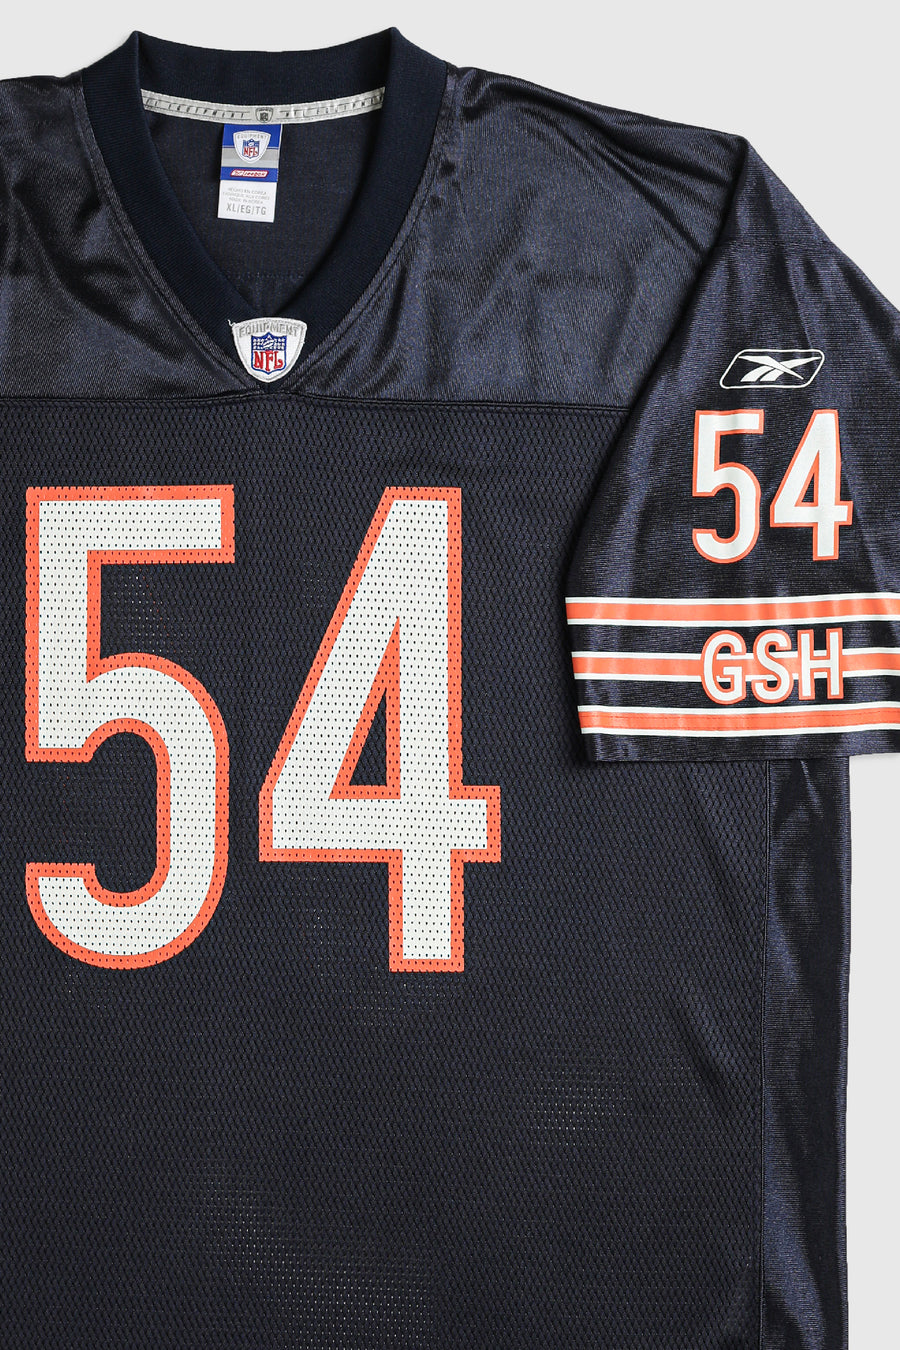 Vintage Bears NFL Jersey - XL